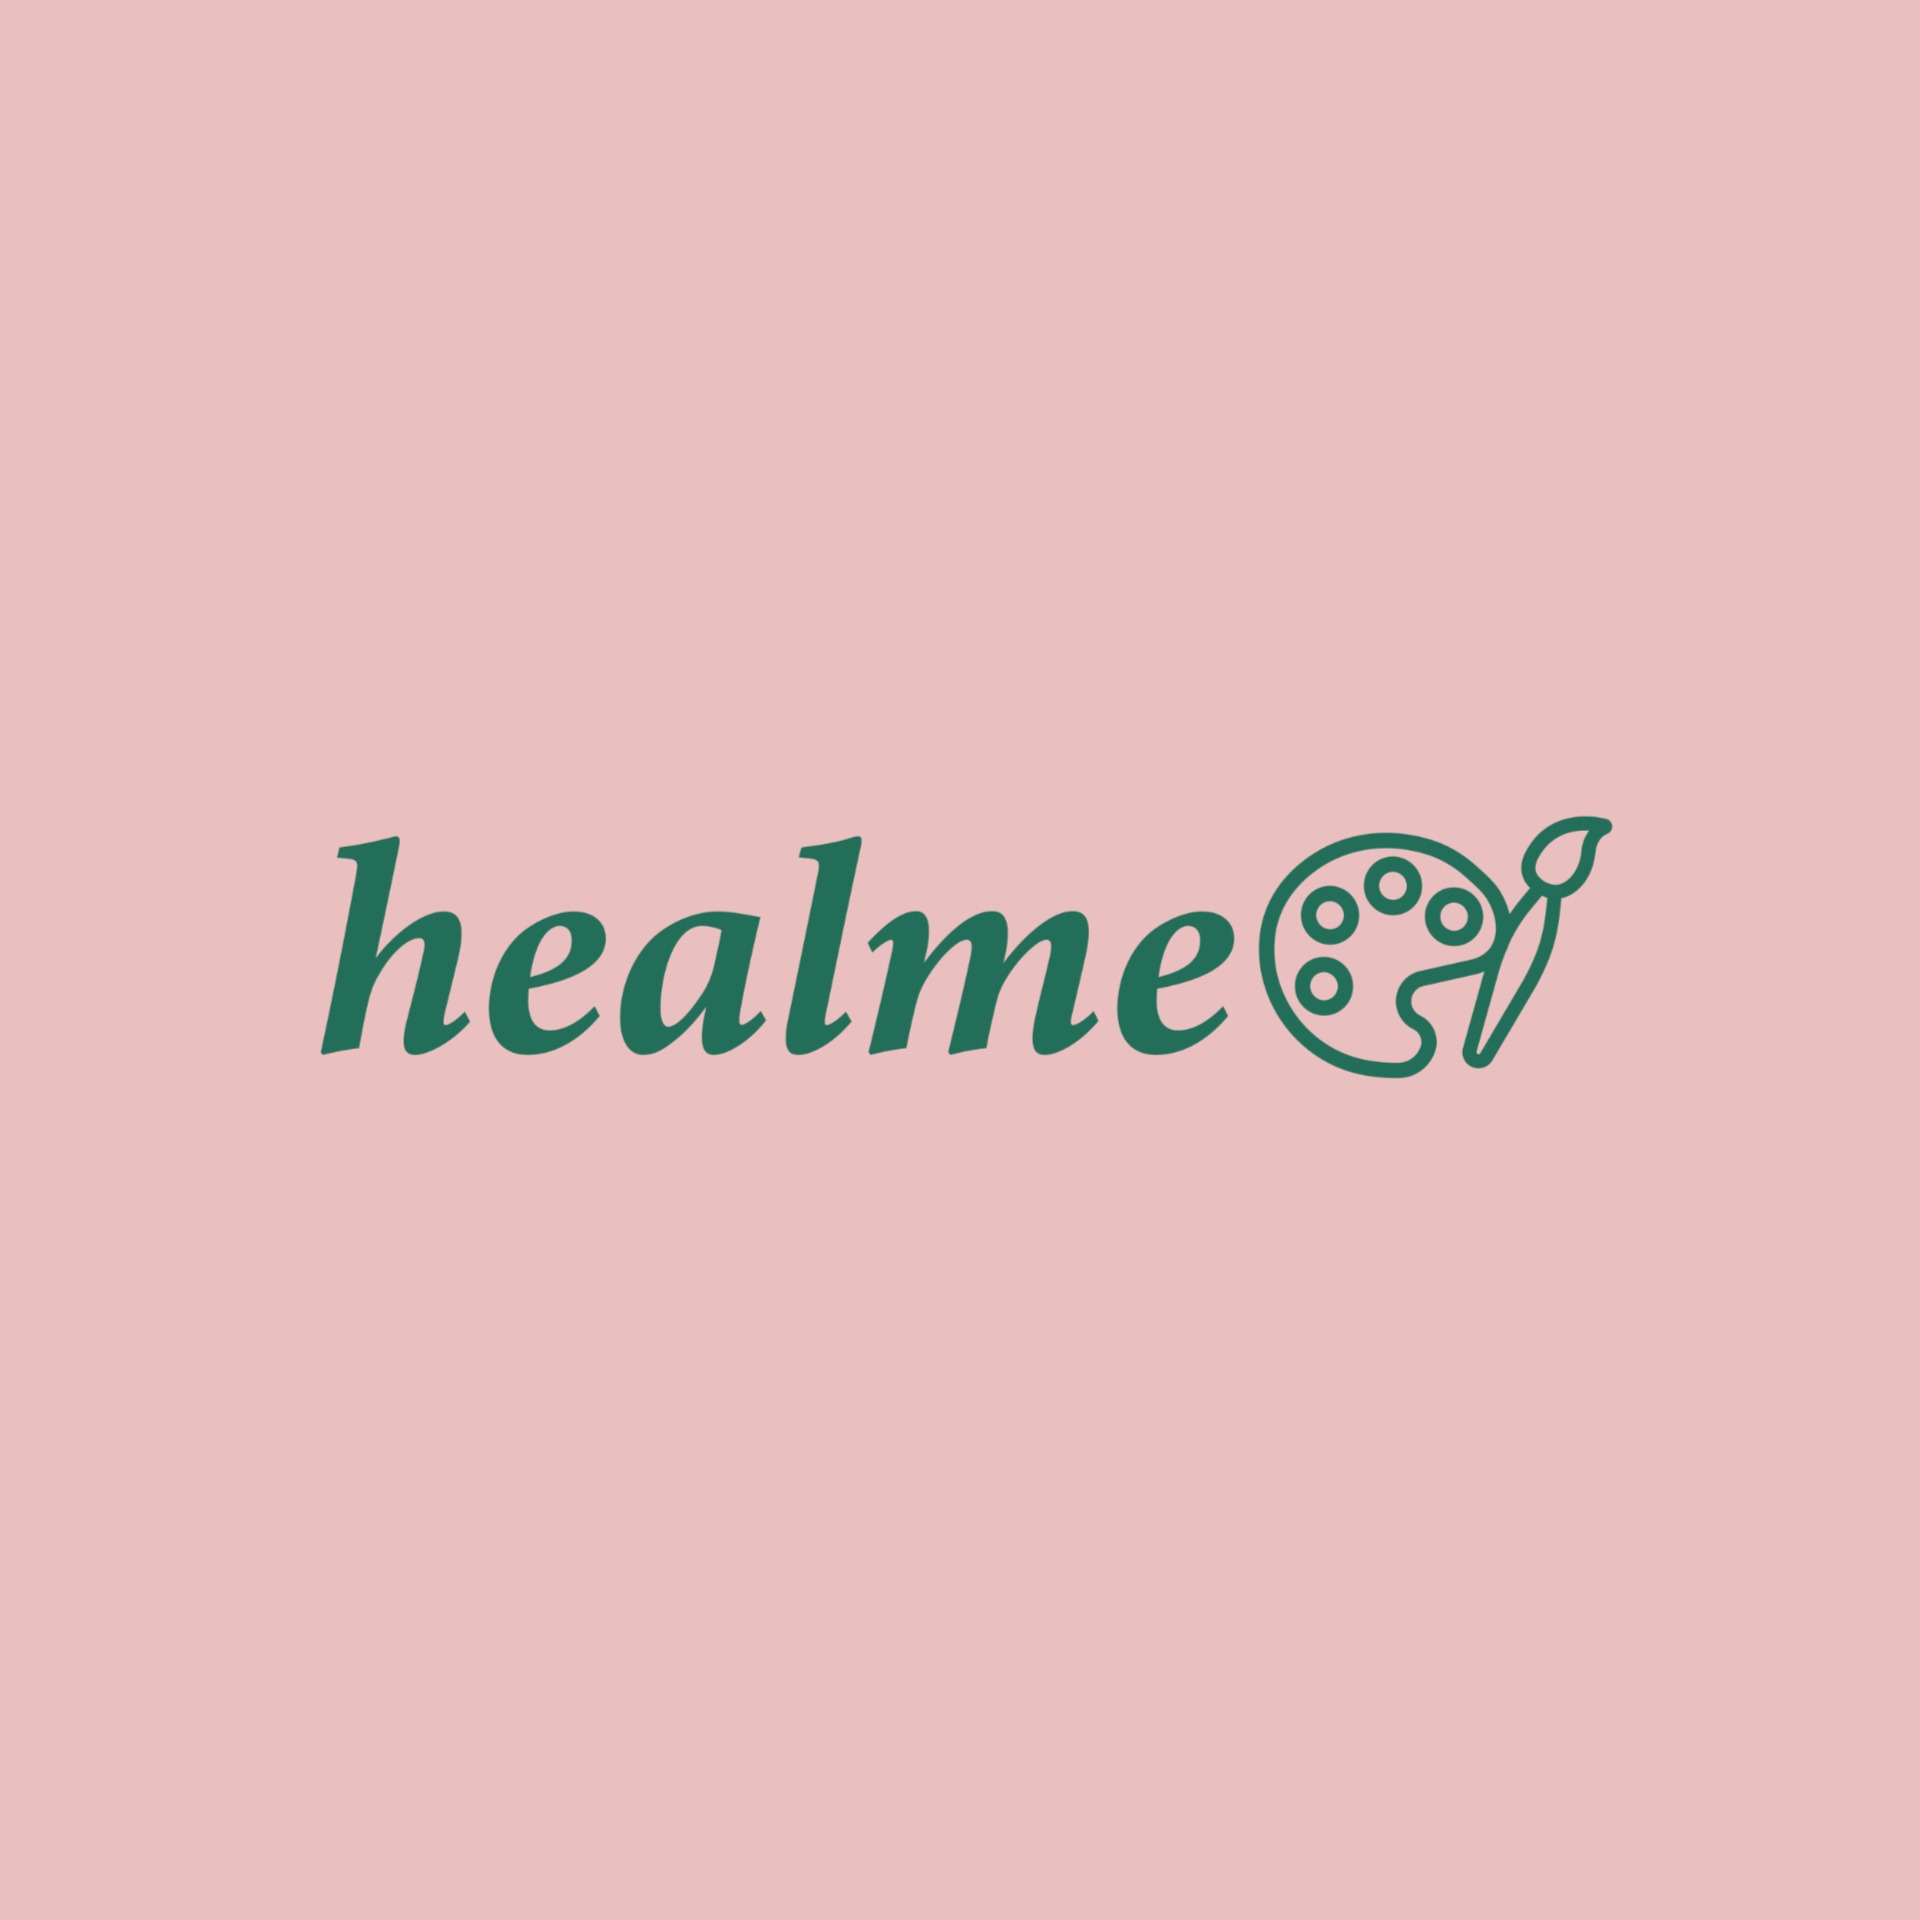 Healme Art Studio